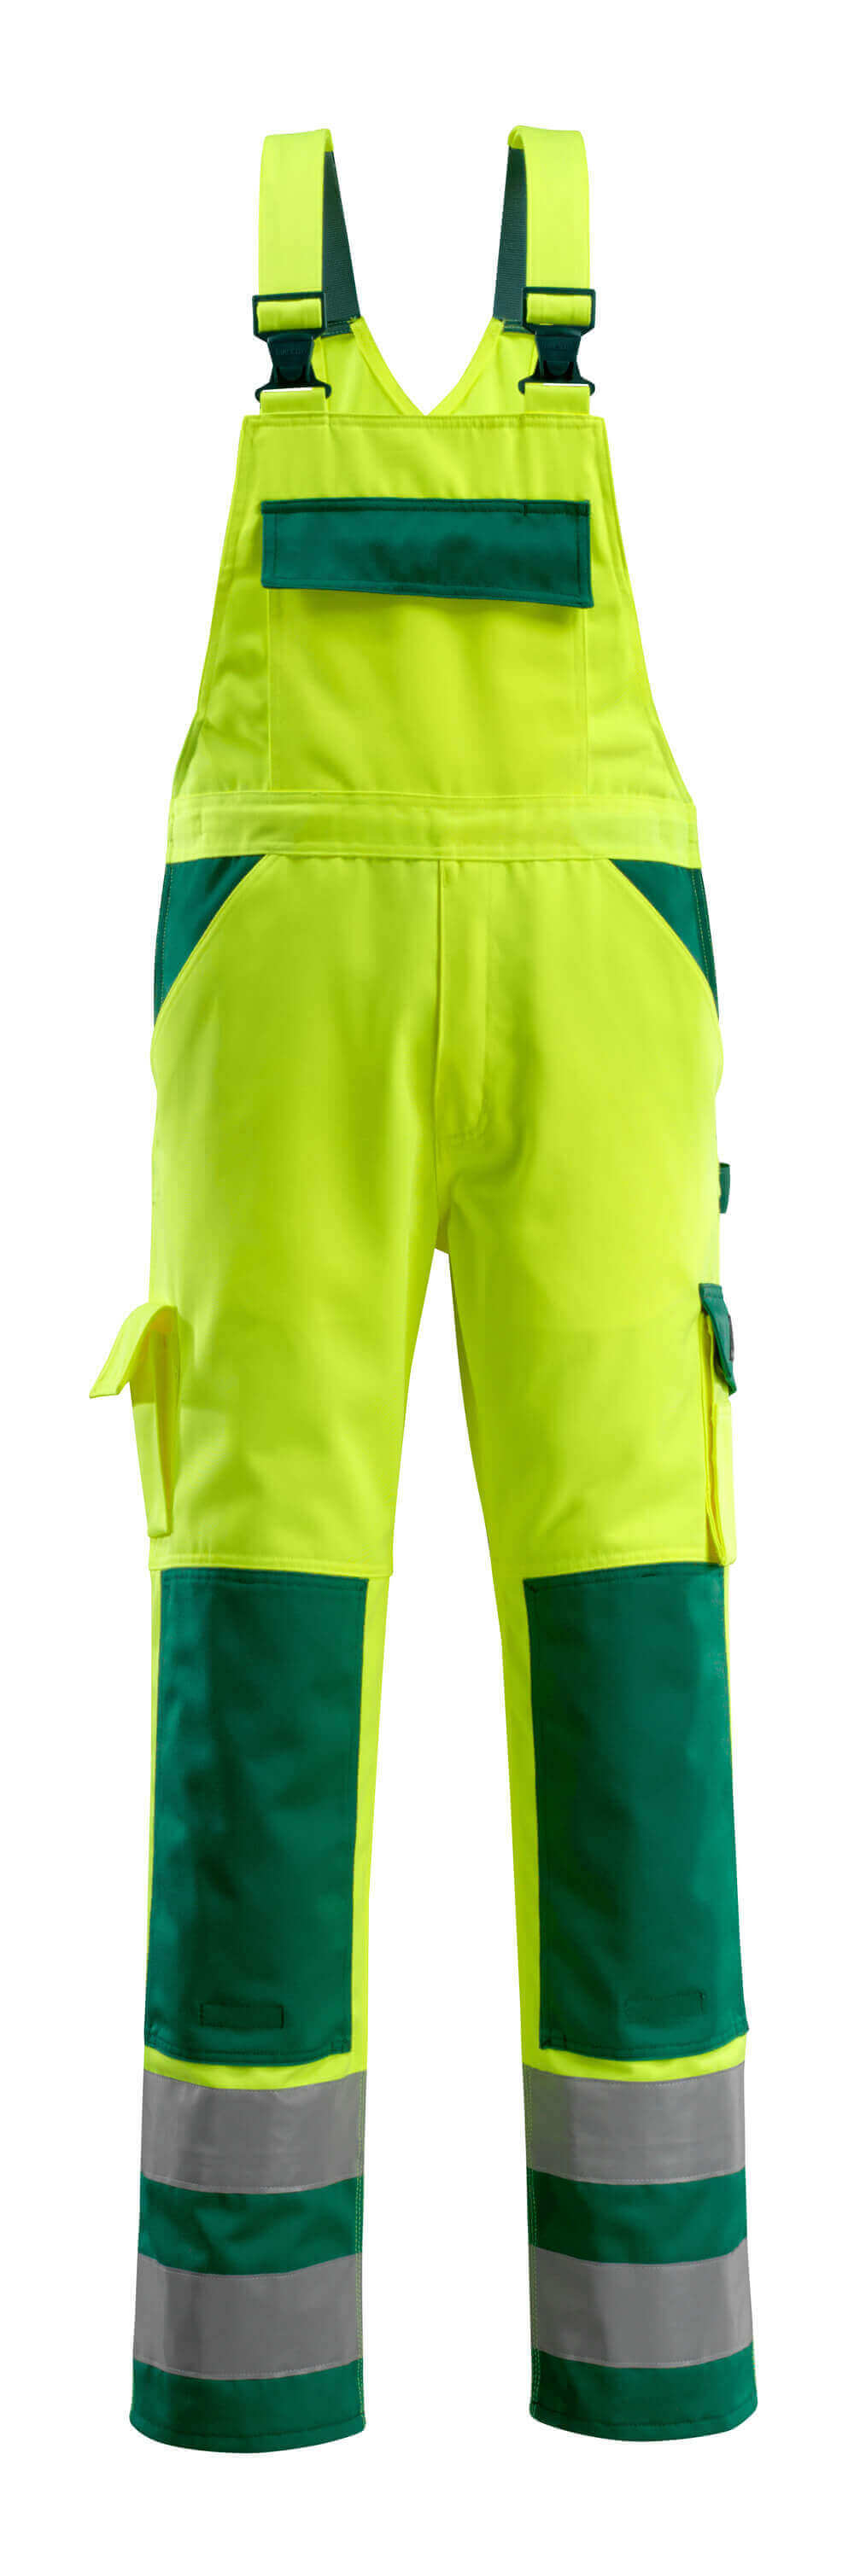 Mascot SAFE COMPETE  Barras Bib & Brace with kneepad pockets 07169 hi-vis yellow/green